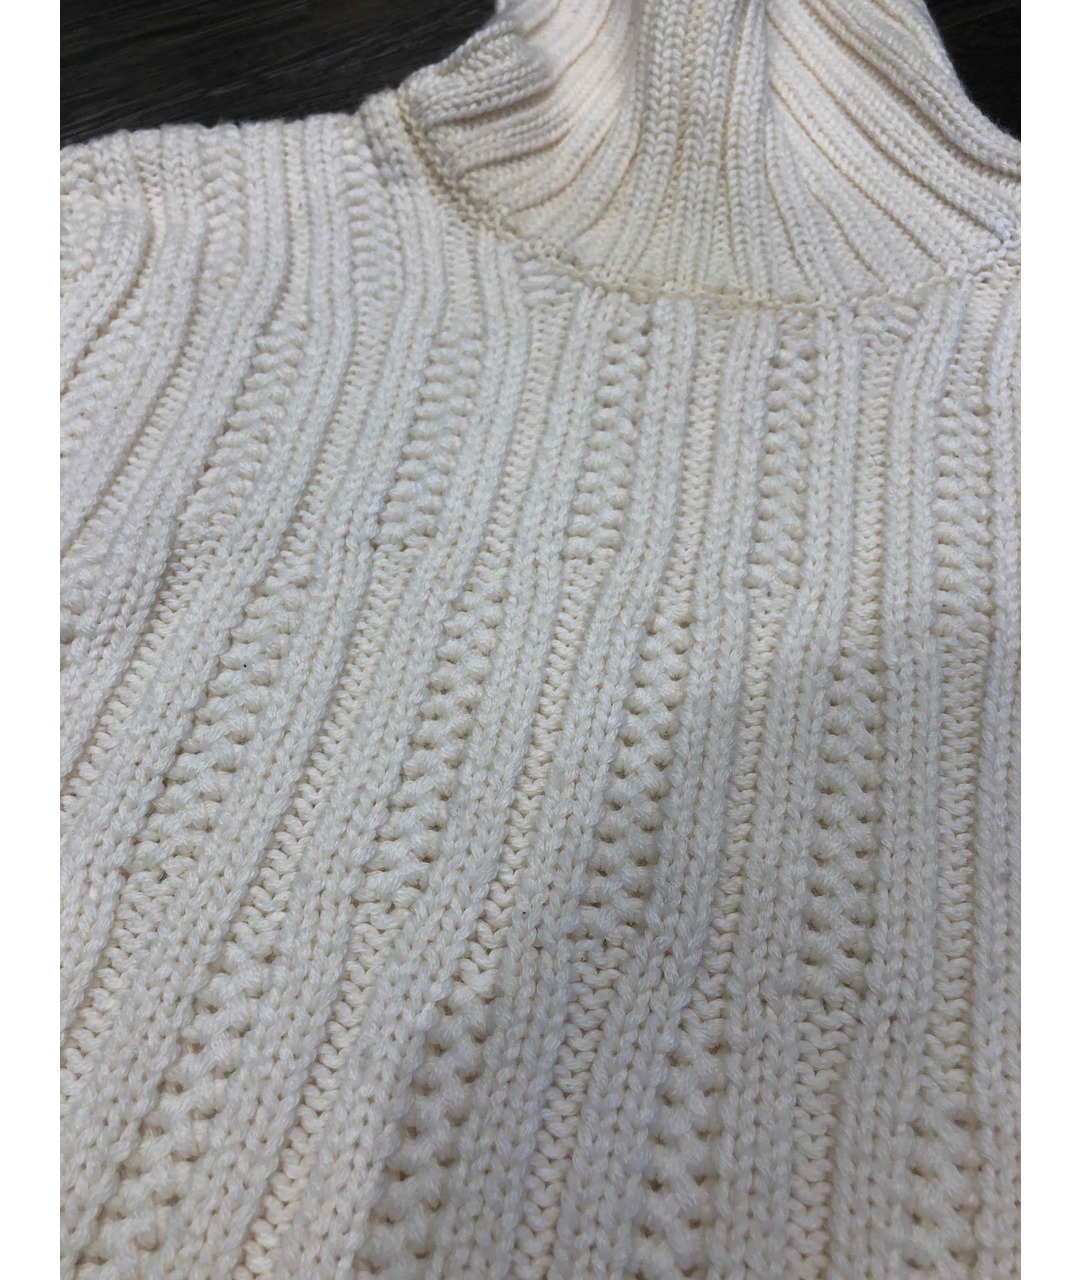 EMPORIO ARMANI Белый шерстяной джемпер / свитер, фото 4